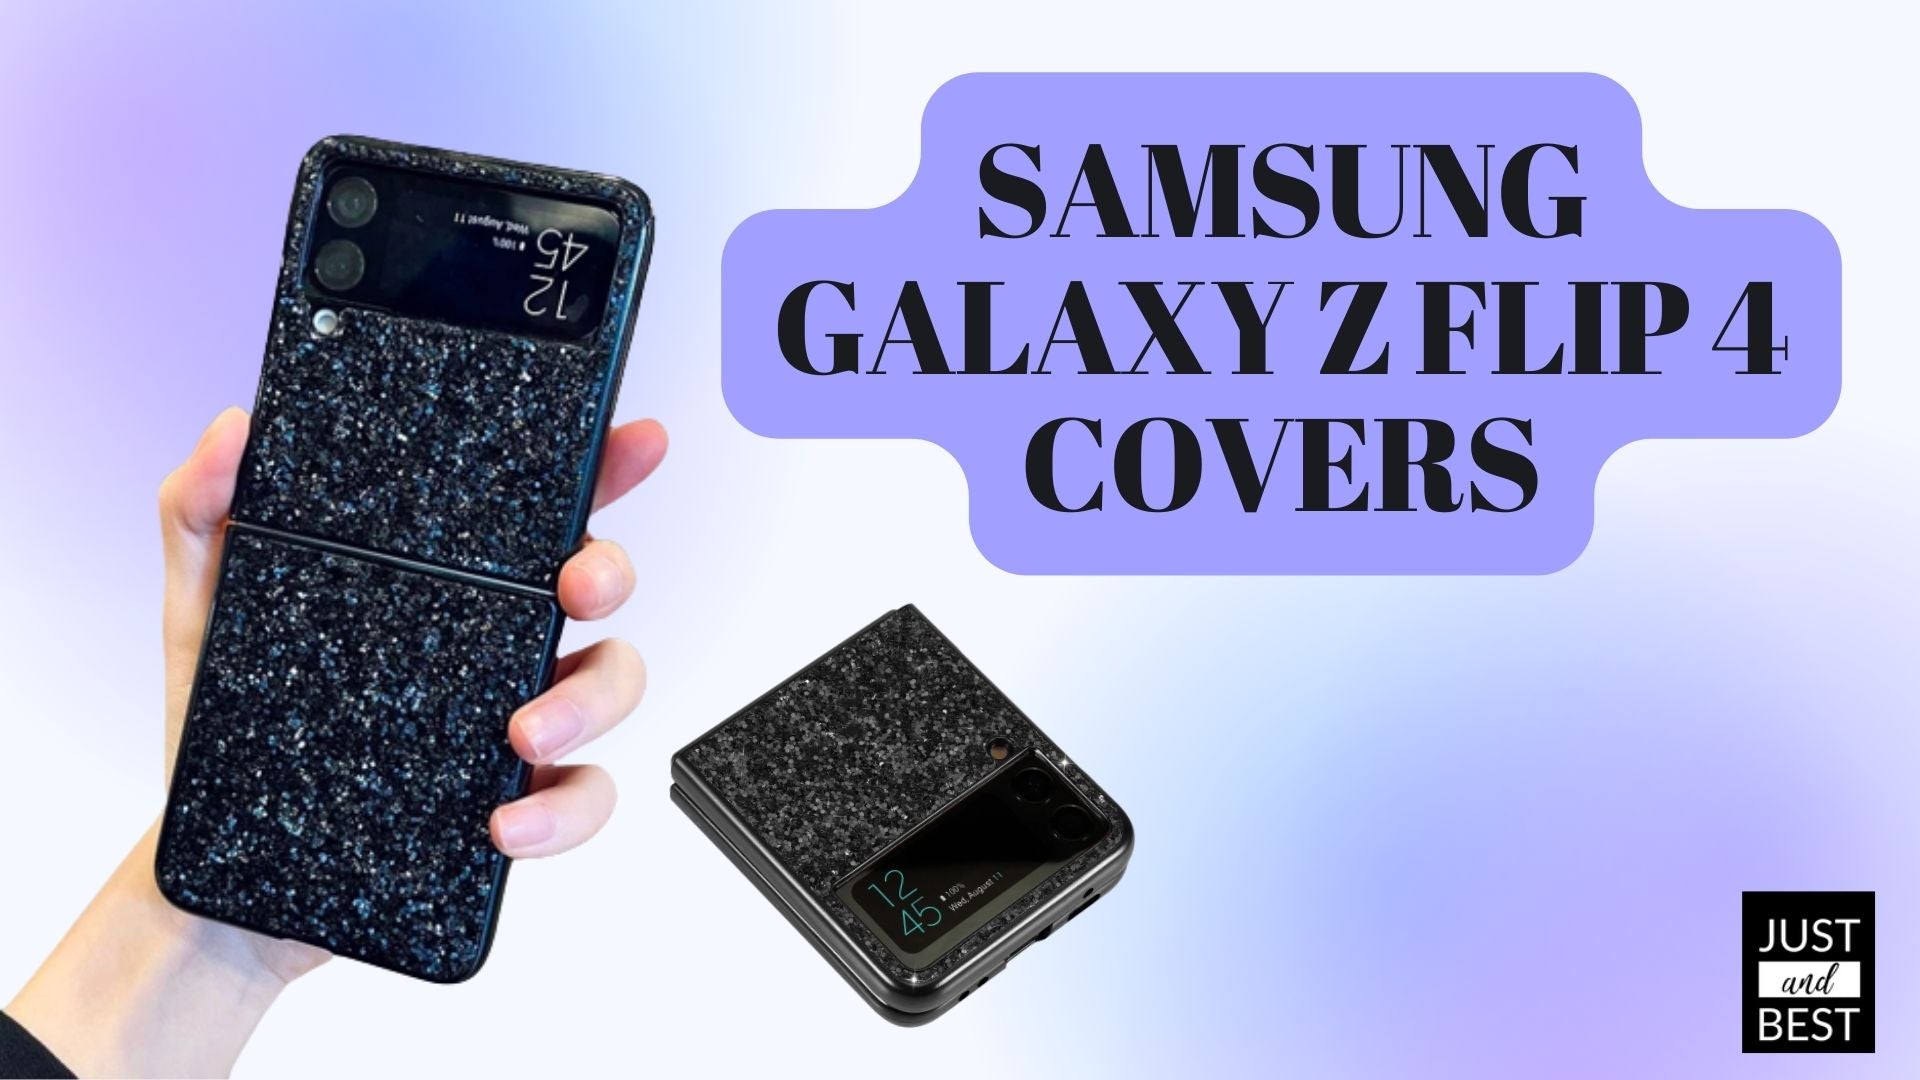 Samsung Galaxy Z Flip 4 Covers